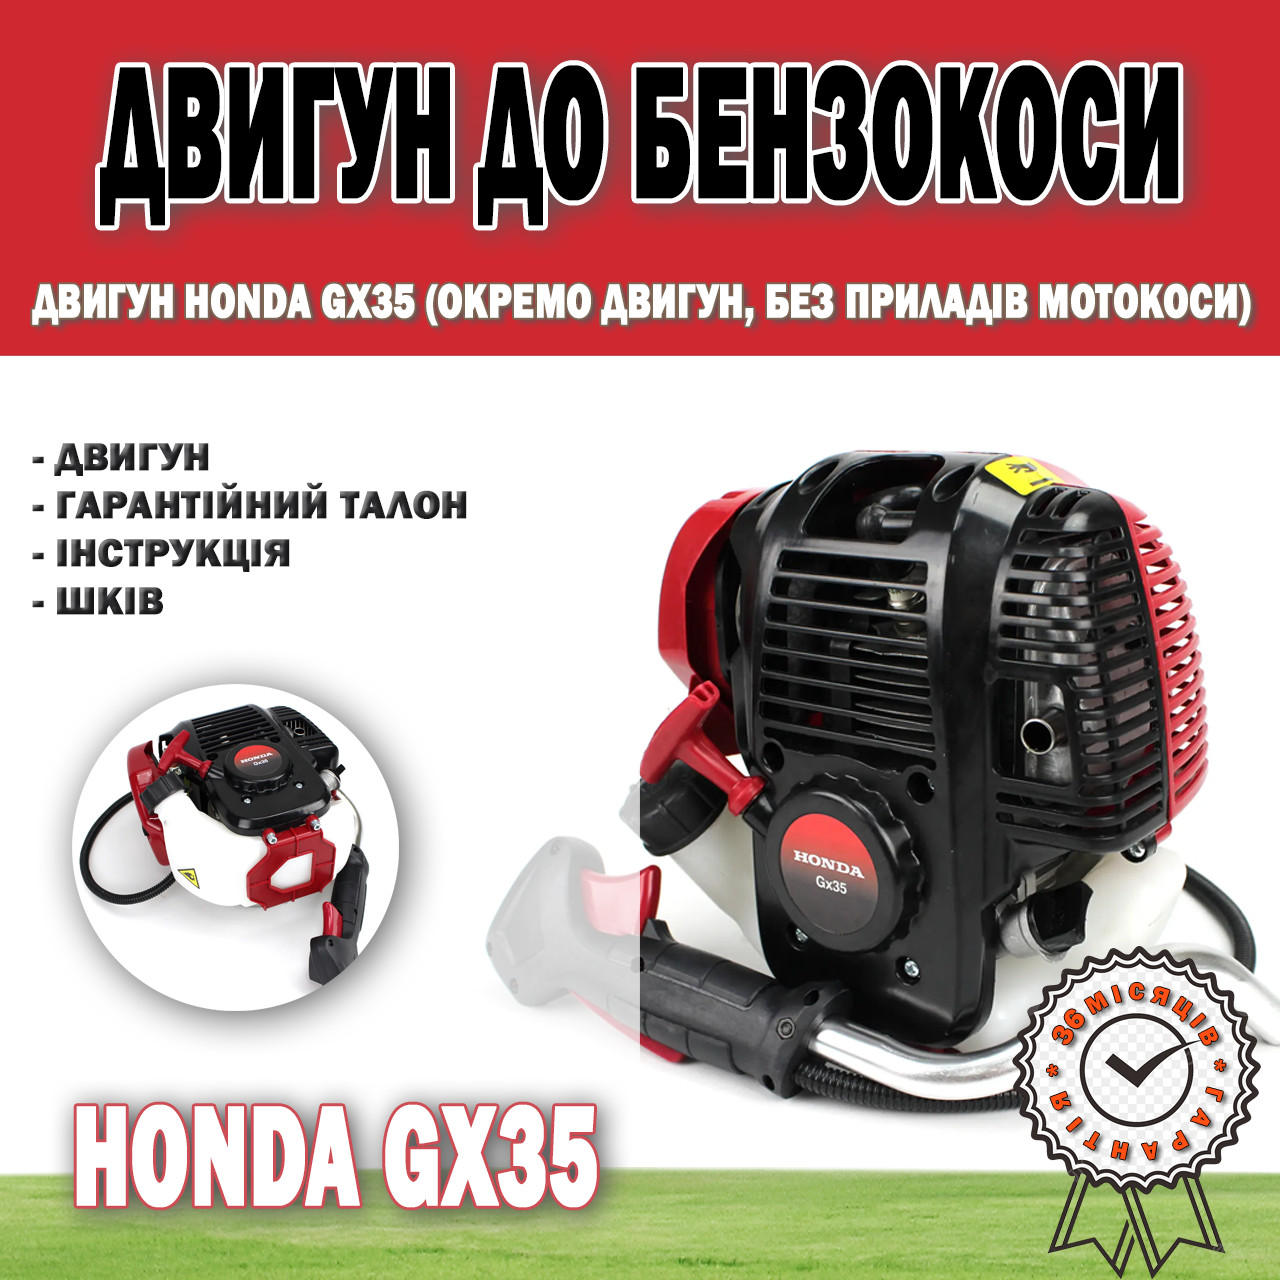 Двигун Honda GX35 (окремо двигун, без приладів мотокоси) | Запчастин для тримера 3.5 кВт/447 л. с.